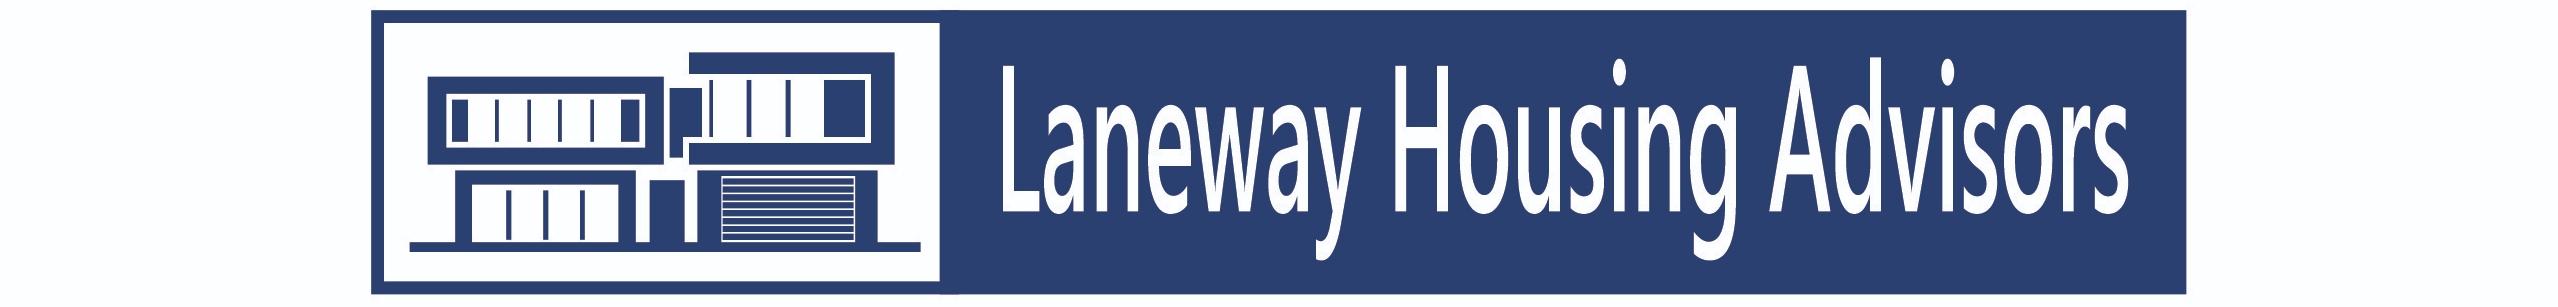 Laneway Housing Advisors